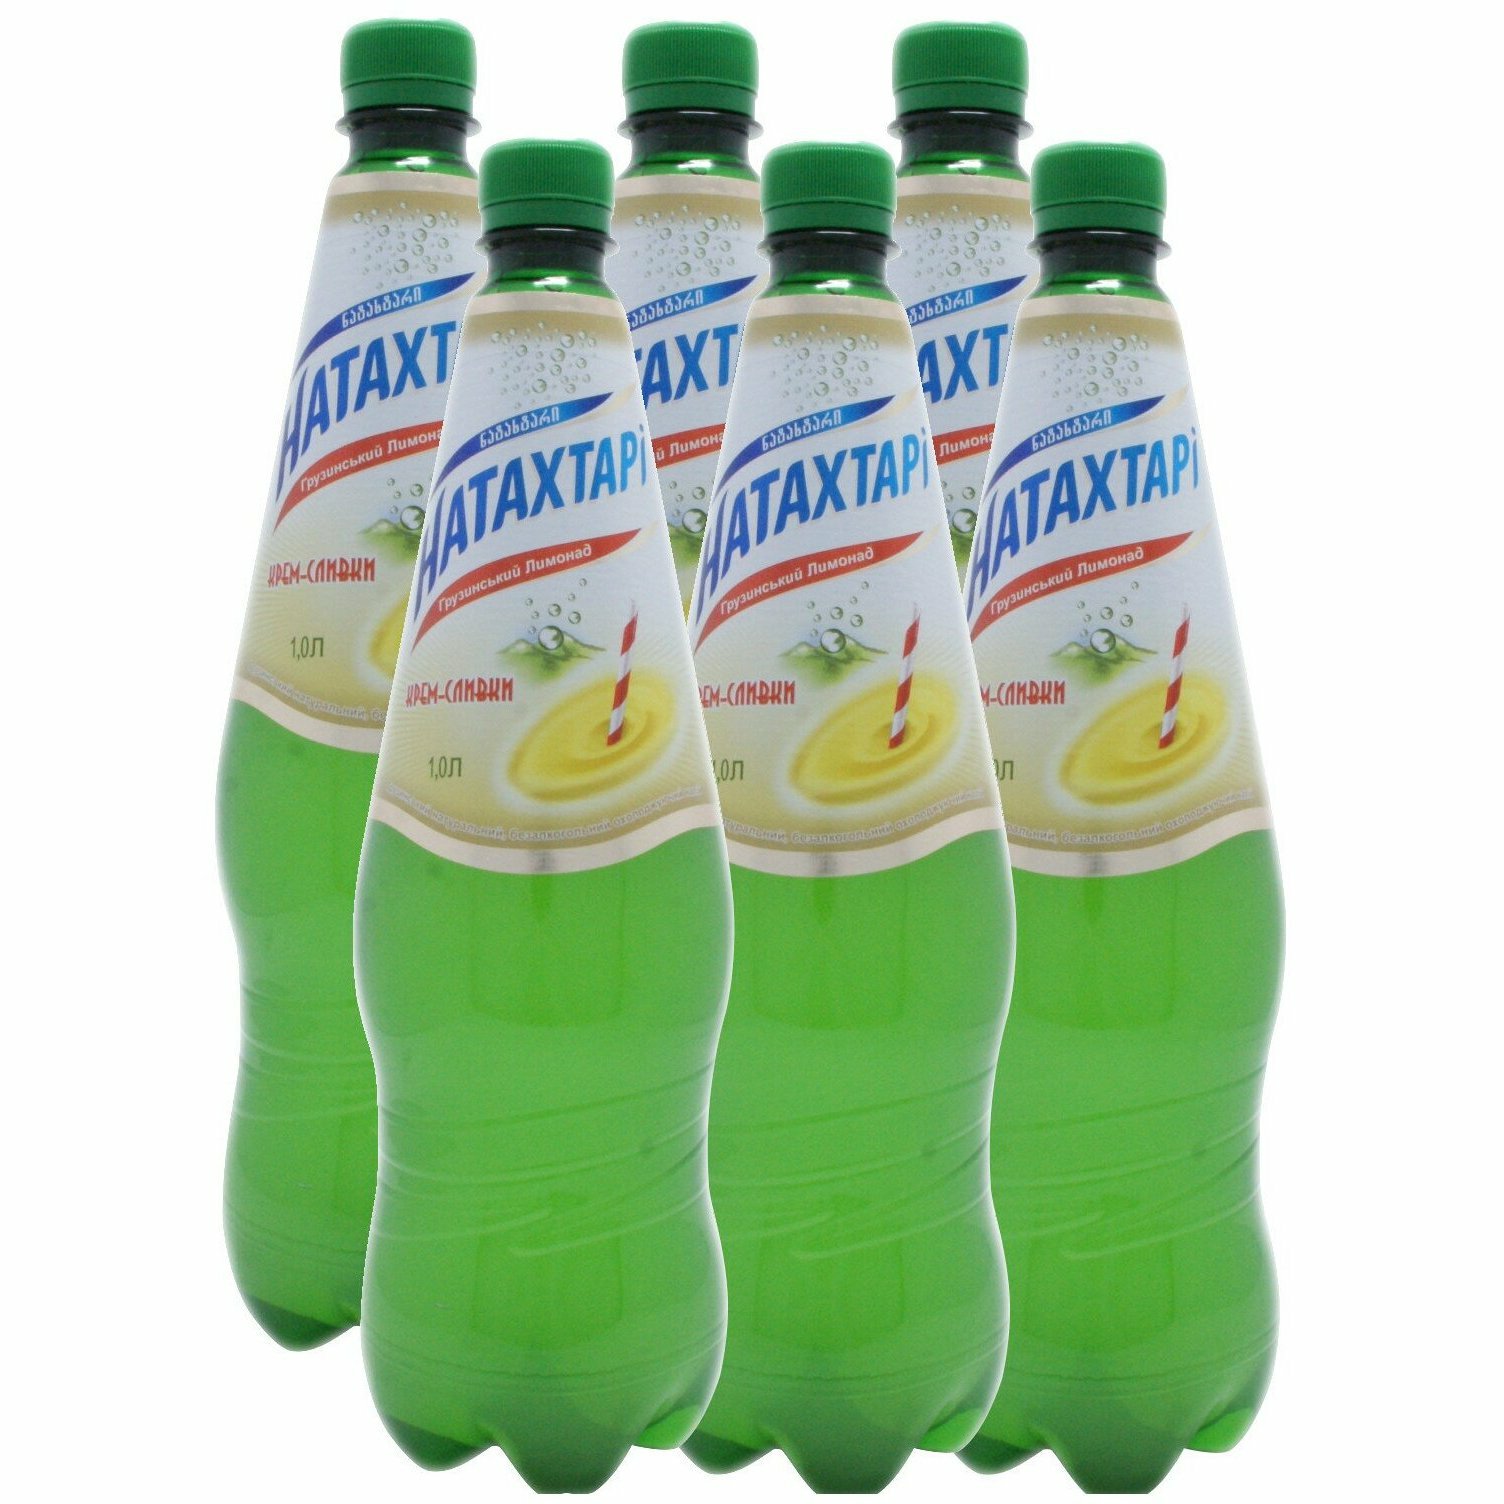 Лимонад Натахтарисливки, крем-сливки, 1 л, пластиковая бутылка, 6 шт.